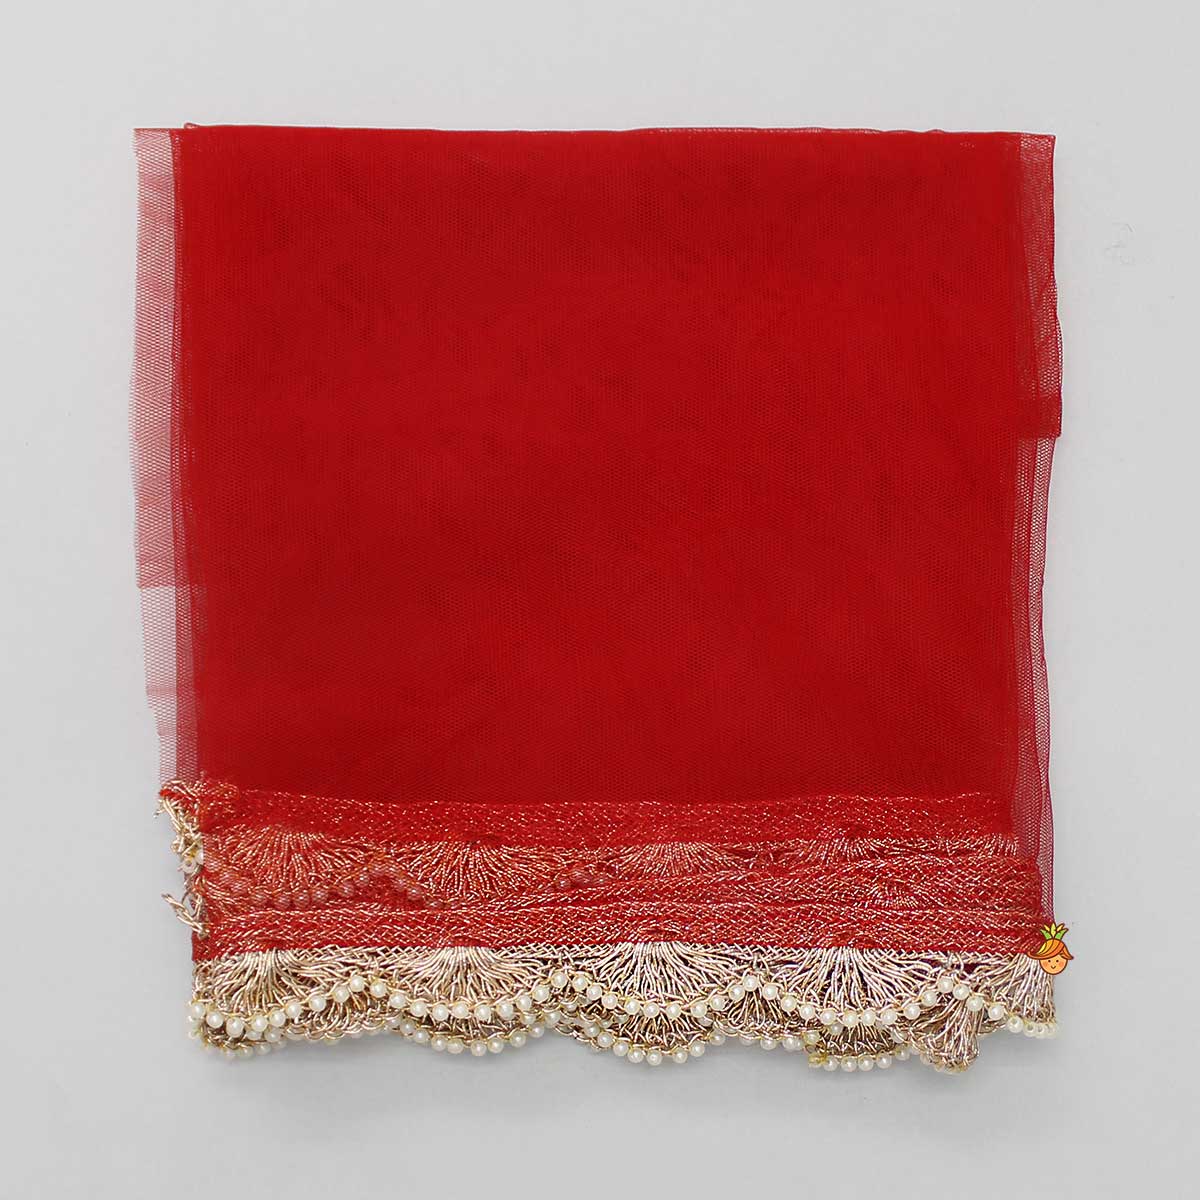 Faux Mirror Work Red Top With Bandhani Printed Lehenga And Dupatta